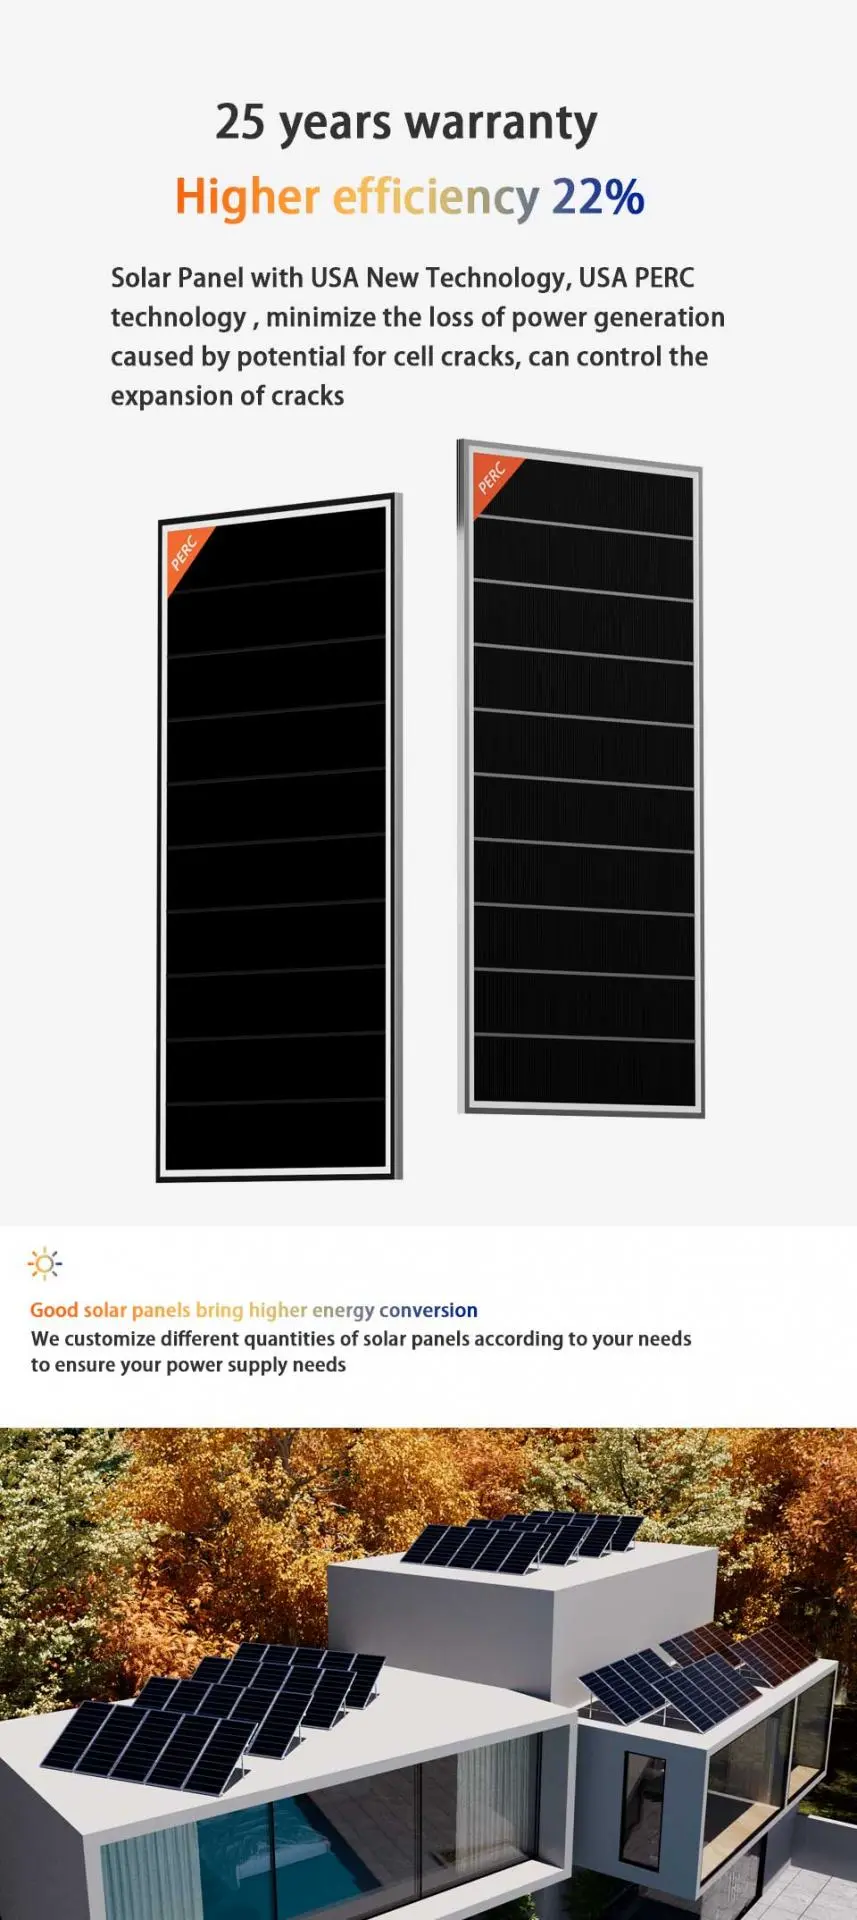 Solar panel production